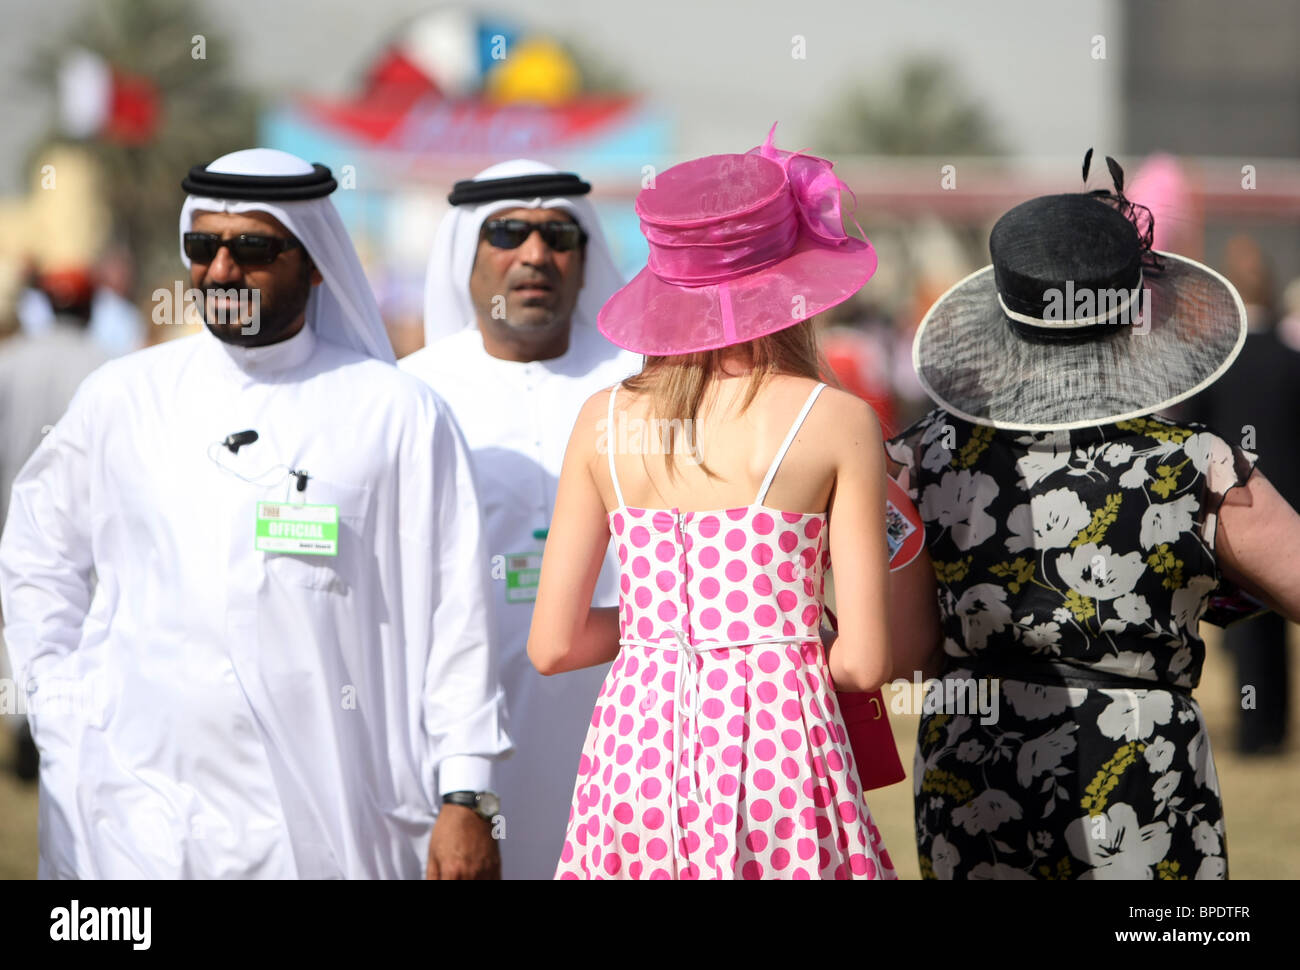 Elegantly dressed women seen from behind, Dubai, United Arab Emirates Stock Photo